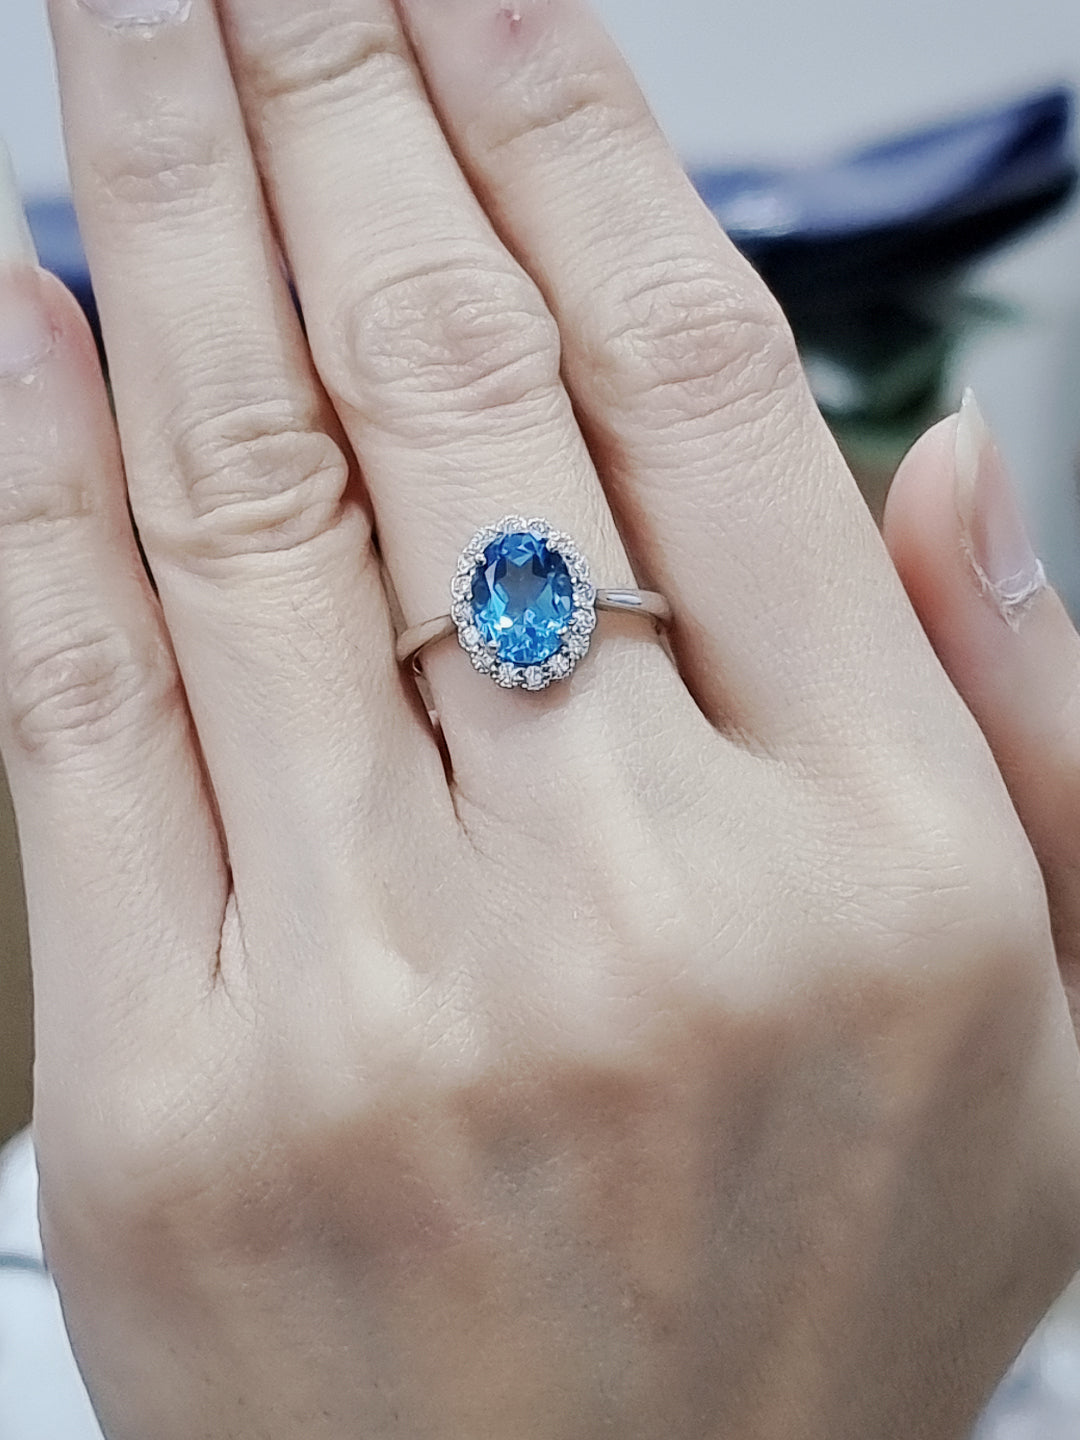 Blue Topaz And Diamond Ring In 18k White Gold.